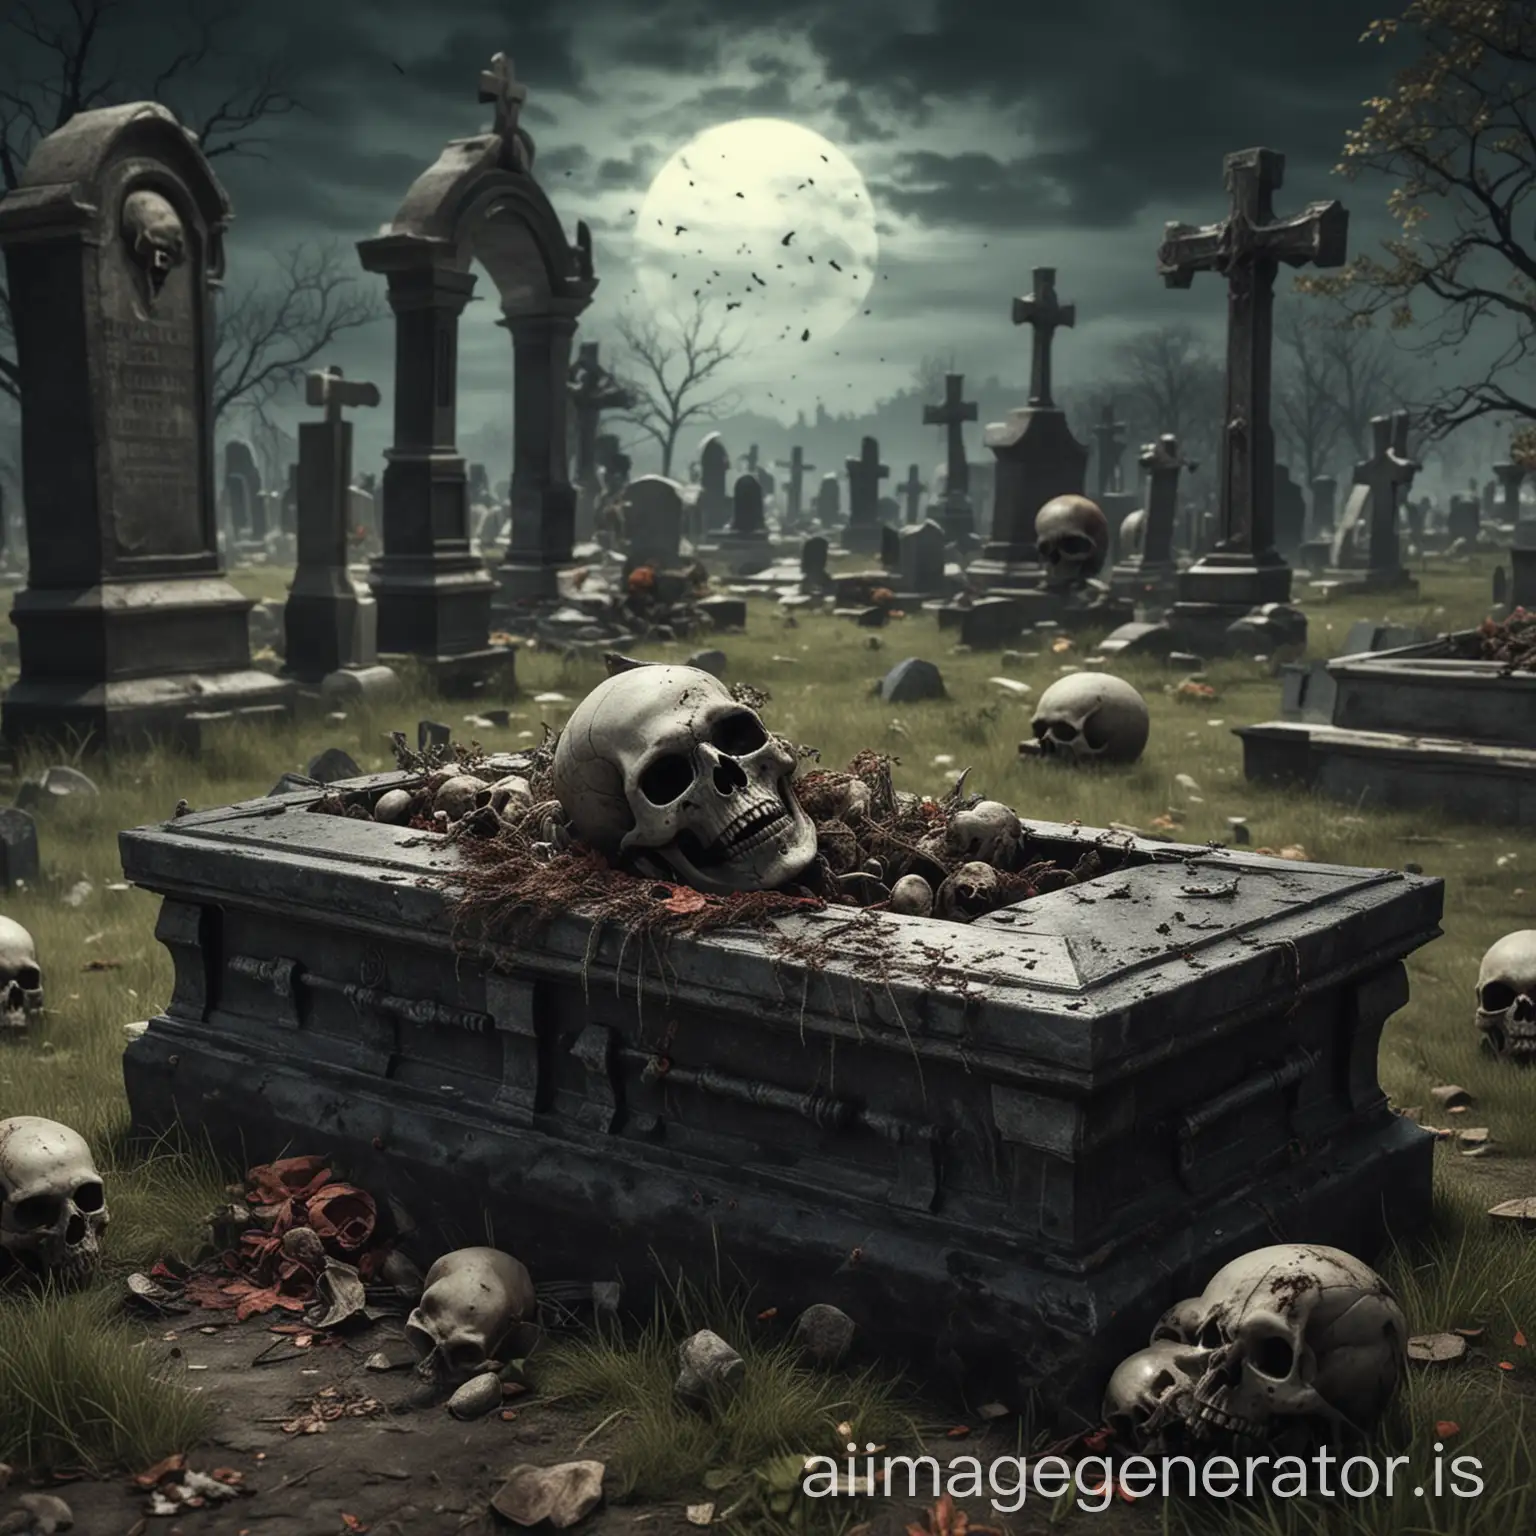 Eerie-Graveyard-Scene-with-Coffins-Skulls-and-Zombies